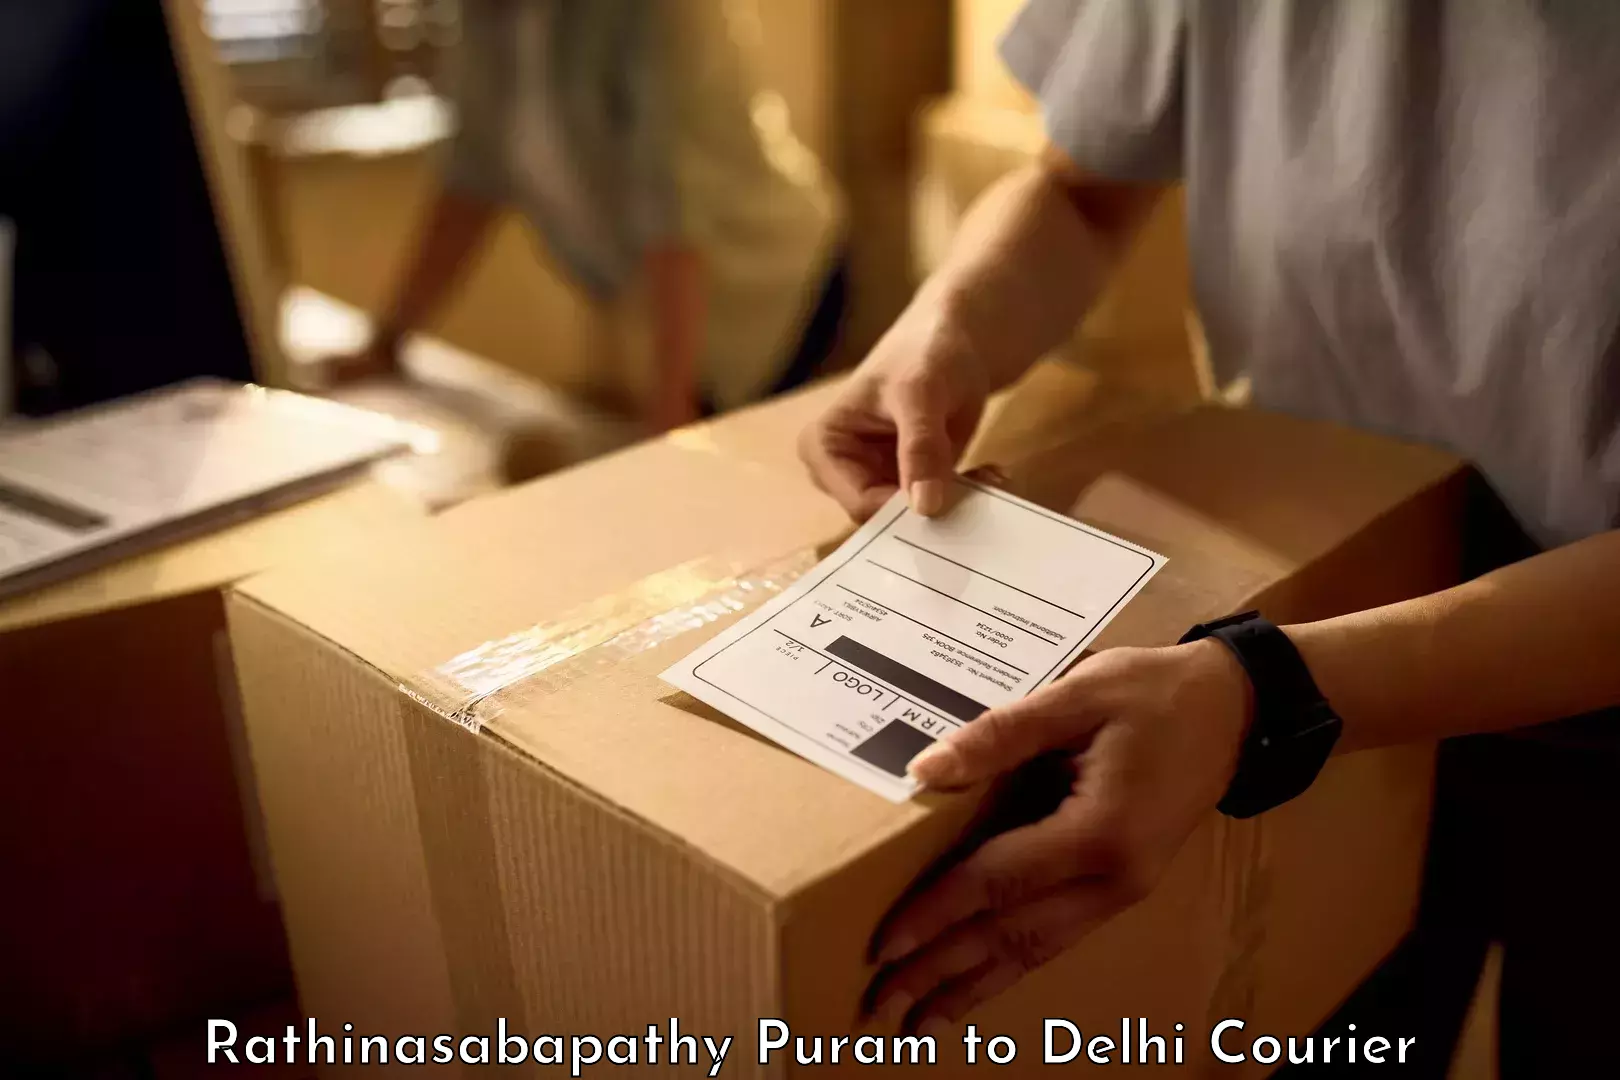 Baggage relocation service Rathinasabapathy Puram to East Delhi